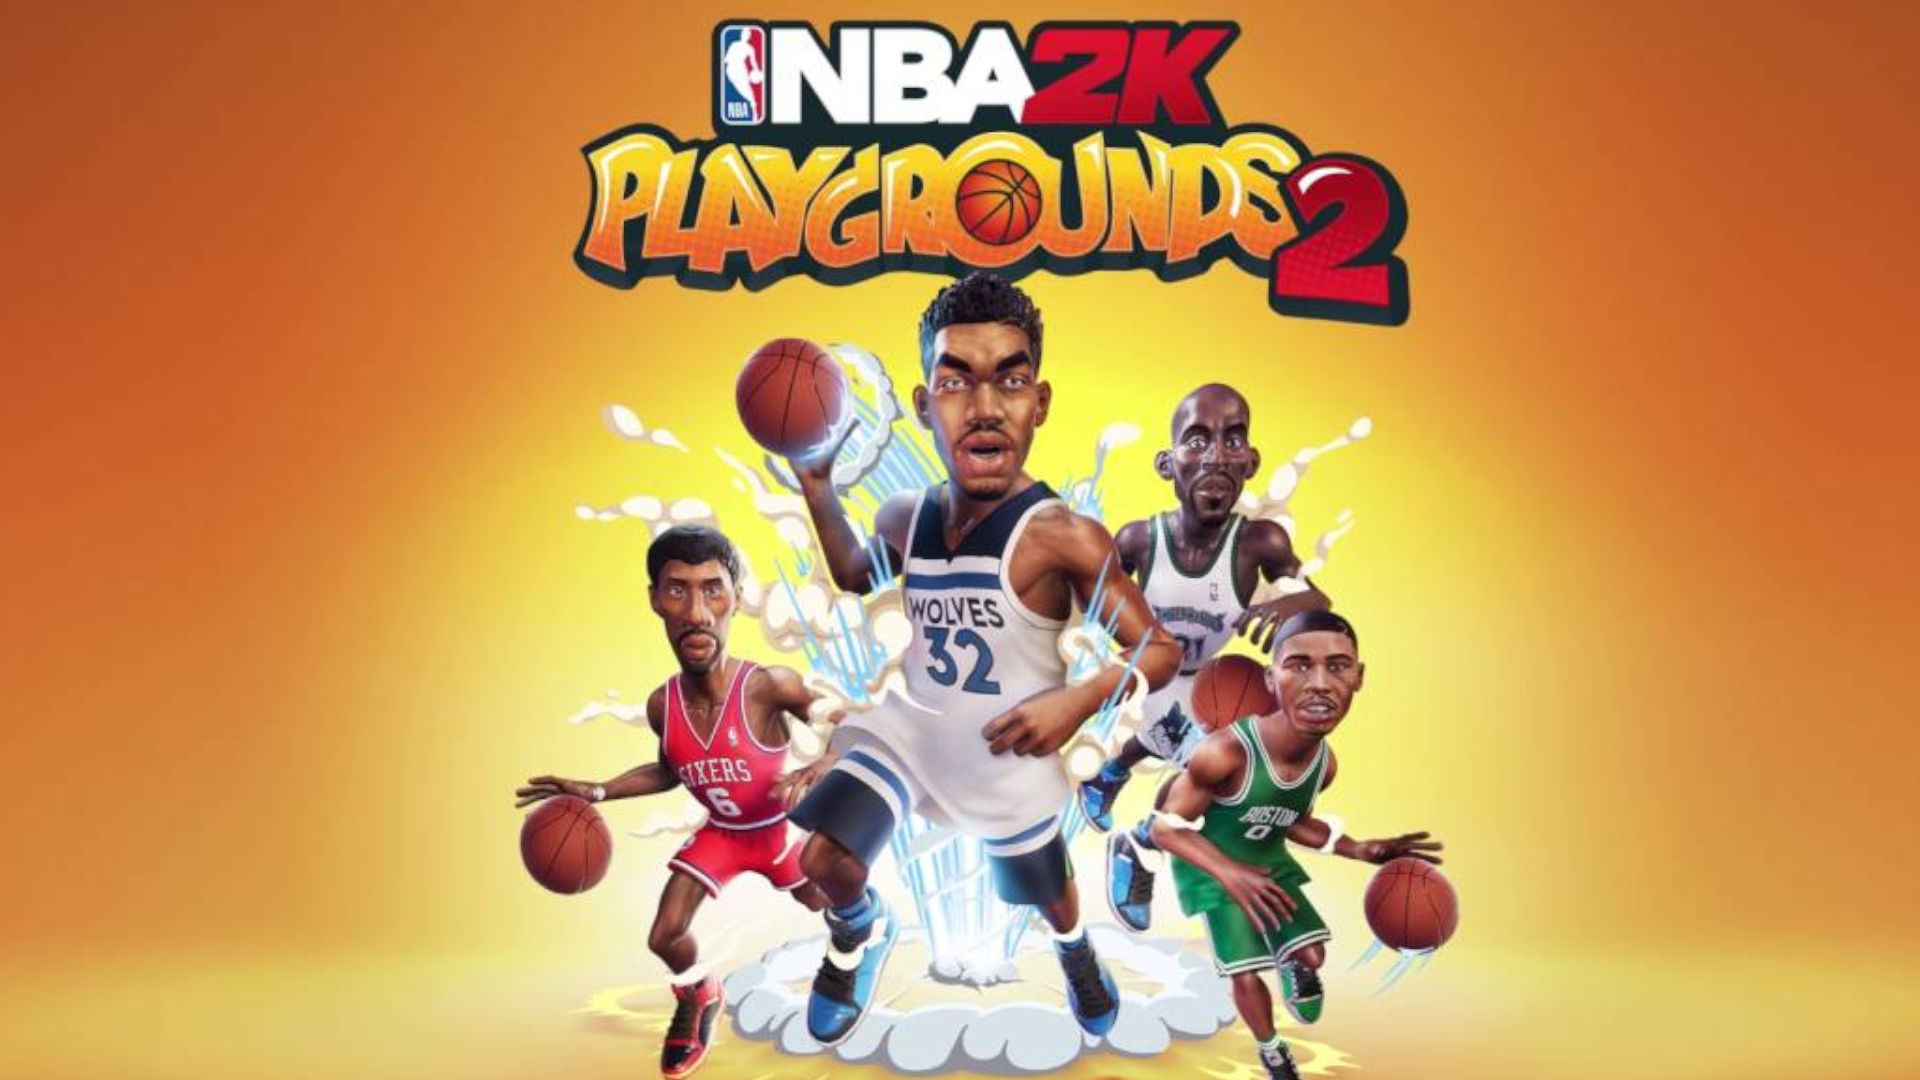 Switchのアーケードバスケットボールゲームの1つであるNBA2KPlaygrounds2のカバーアート